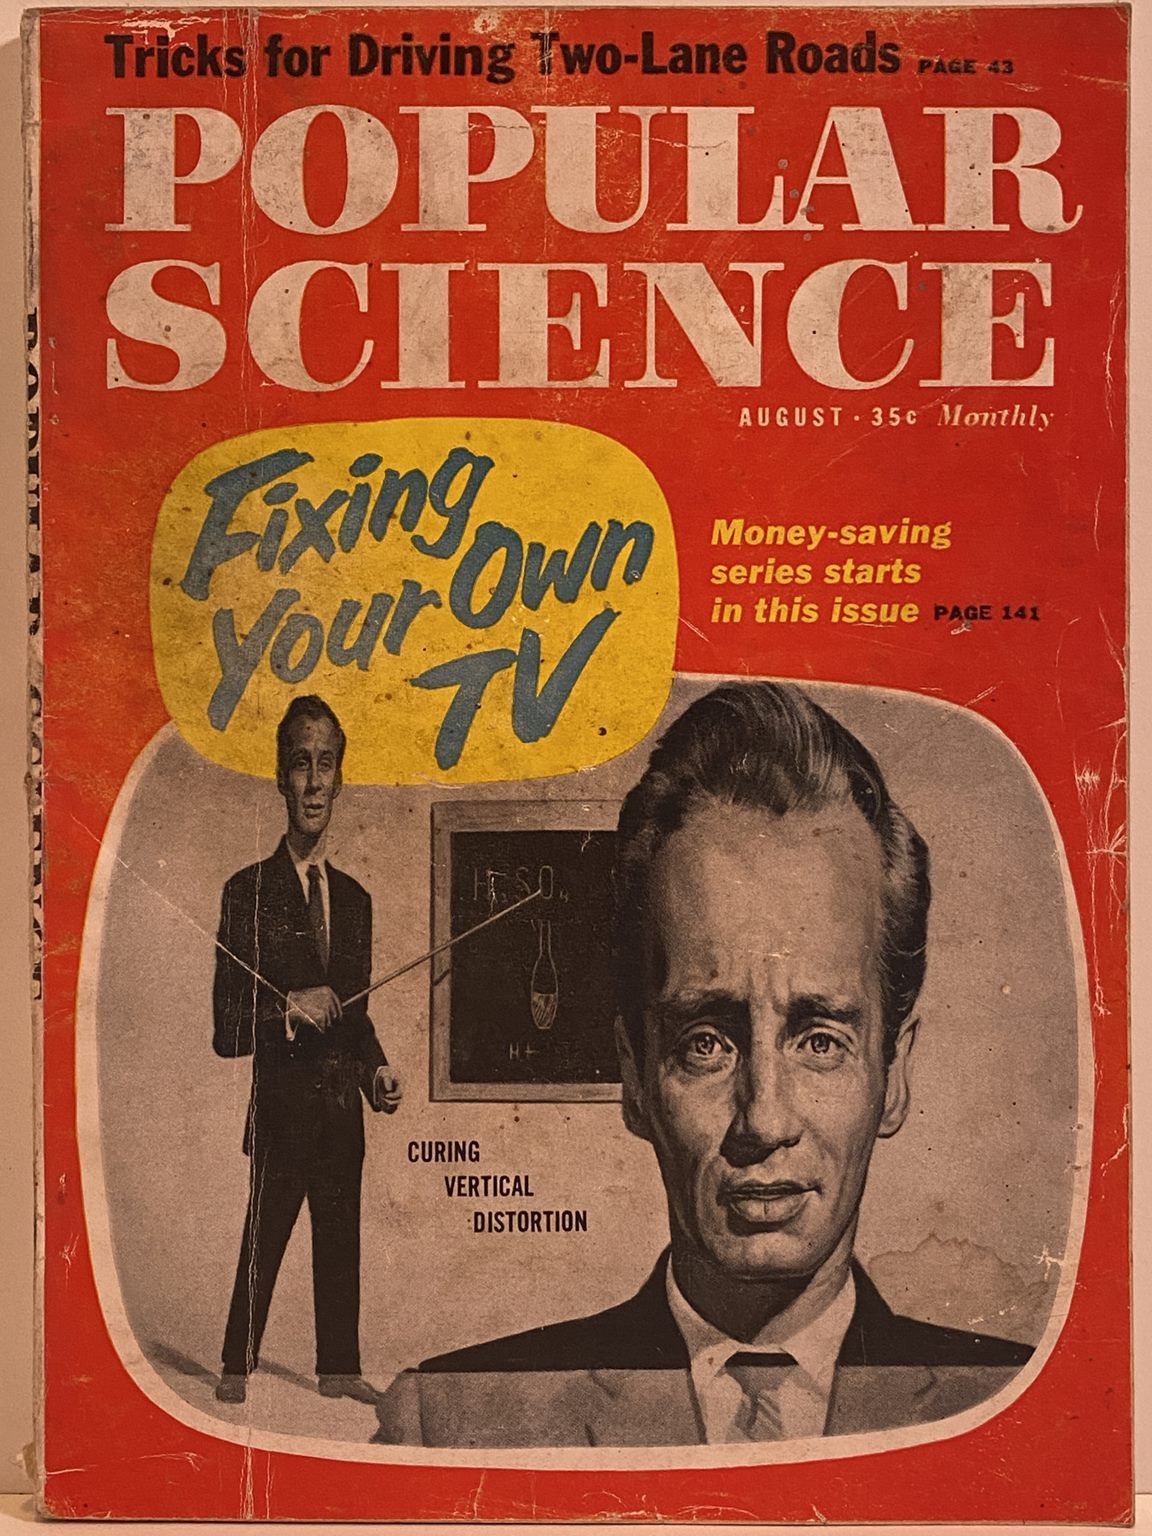 VINTAGE MAGAZINE: Popular Science, Vol. 177, No. 2 - August 1960